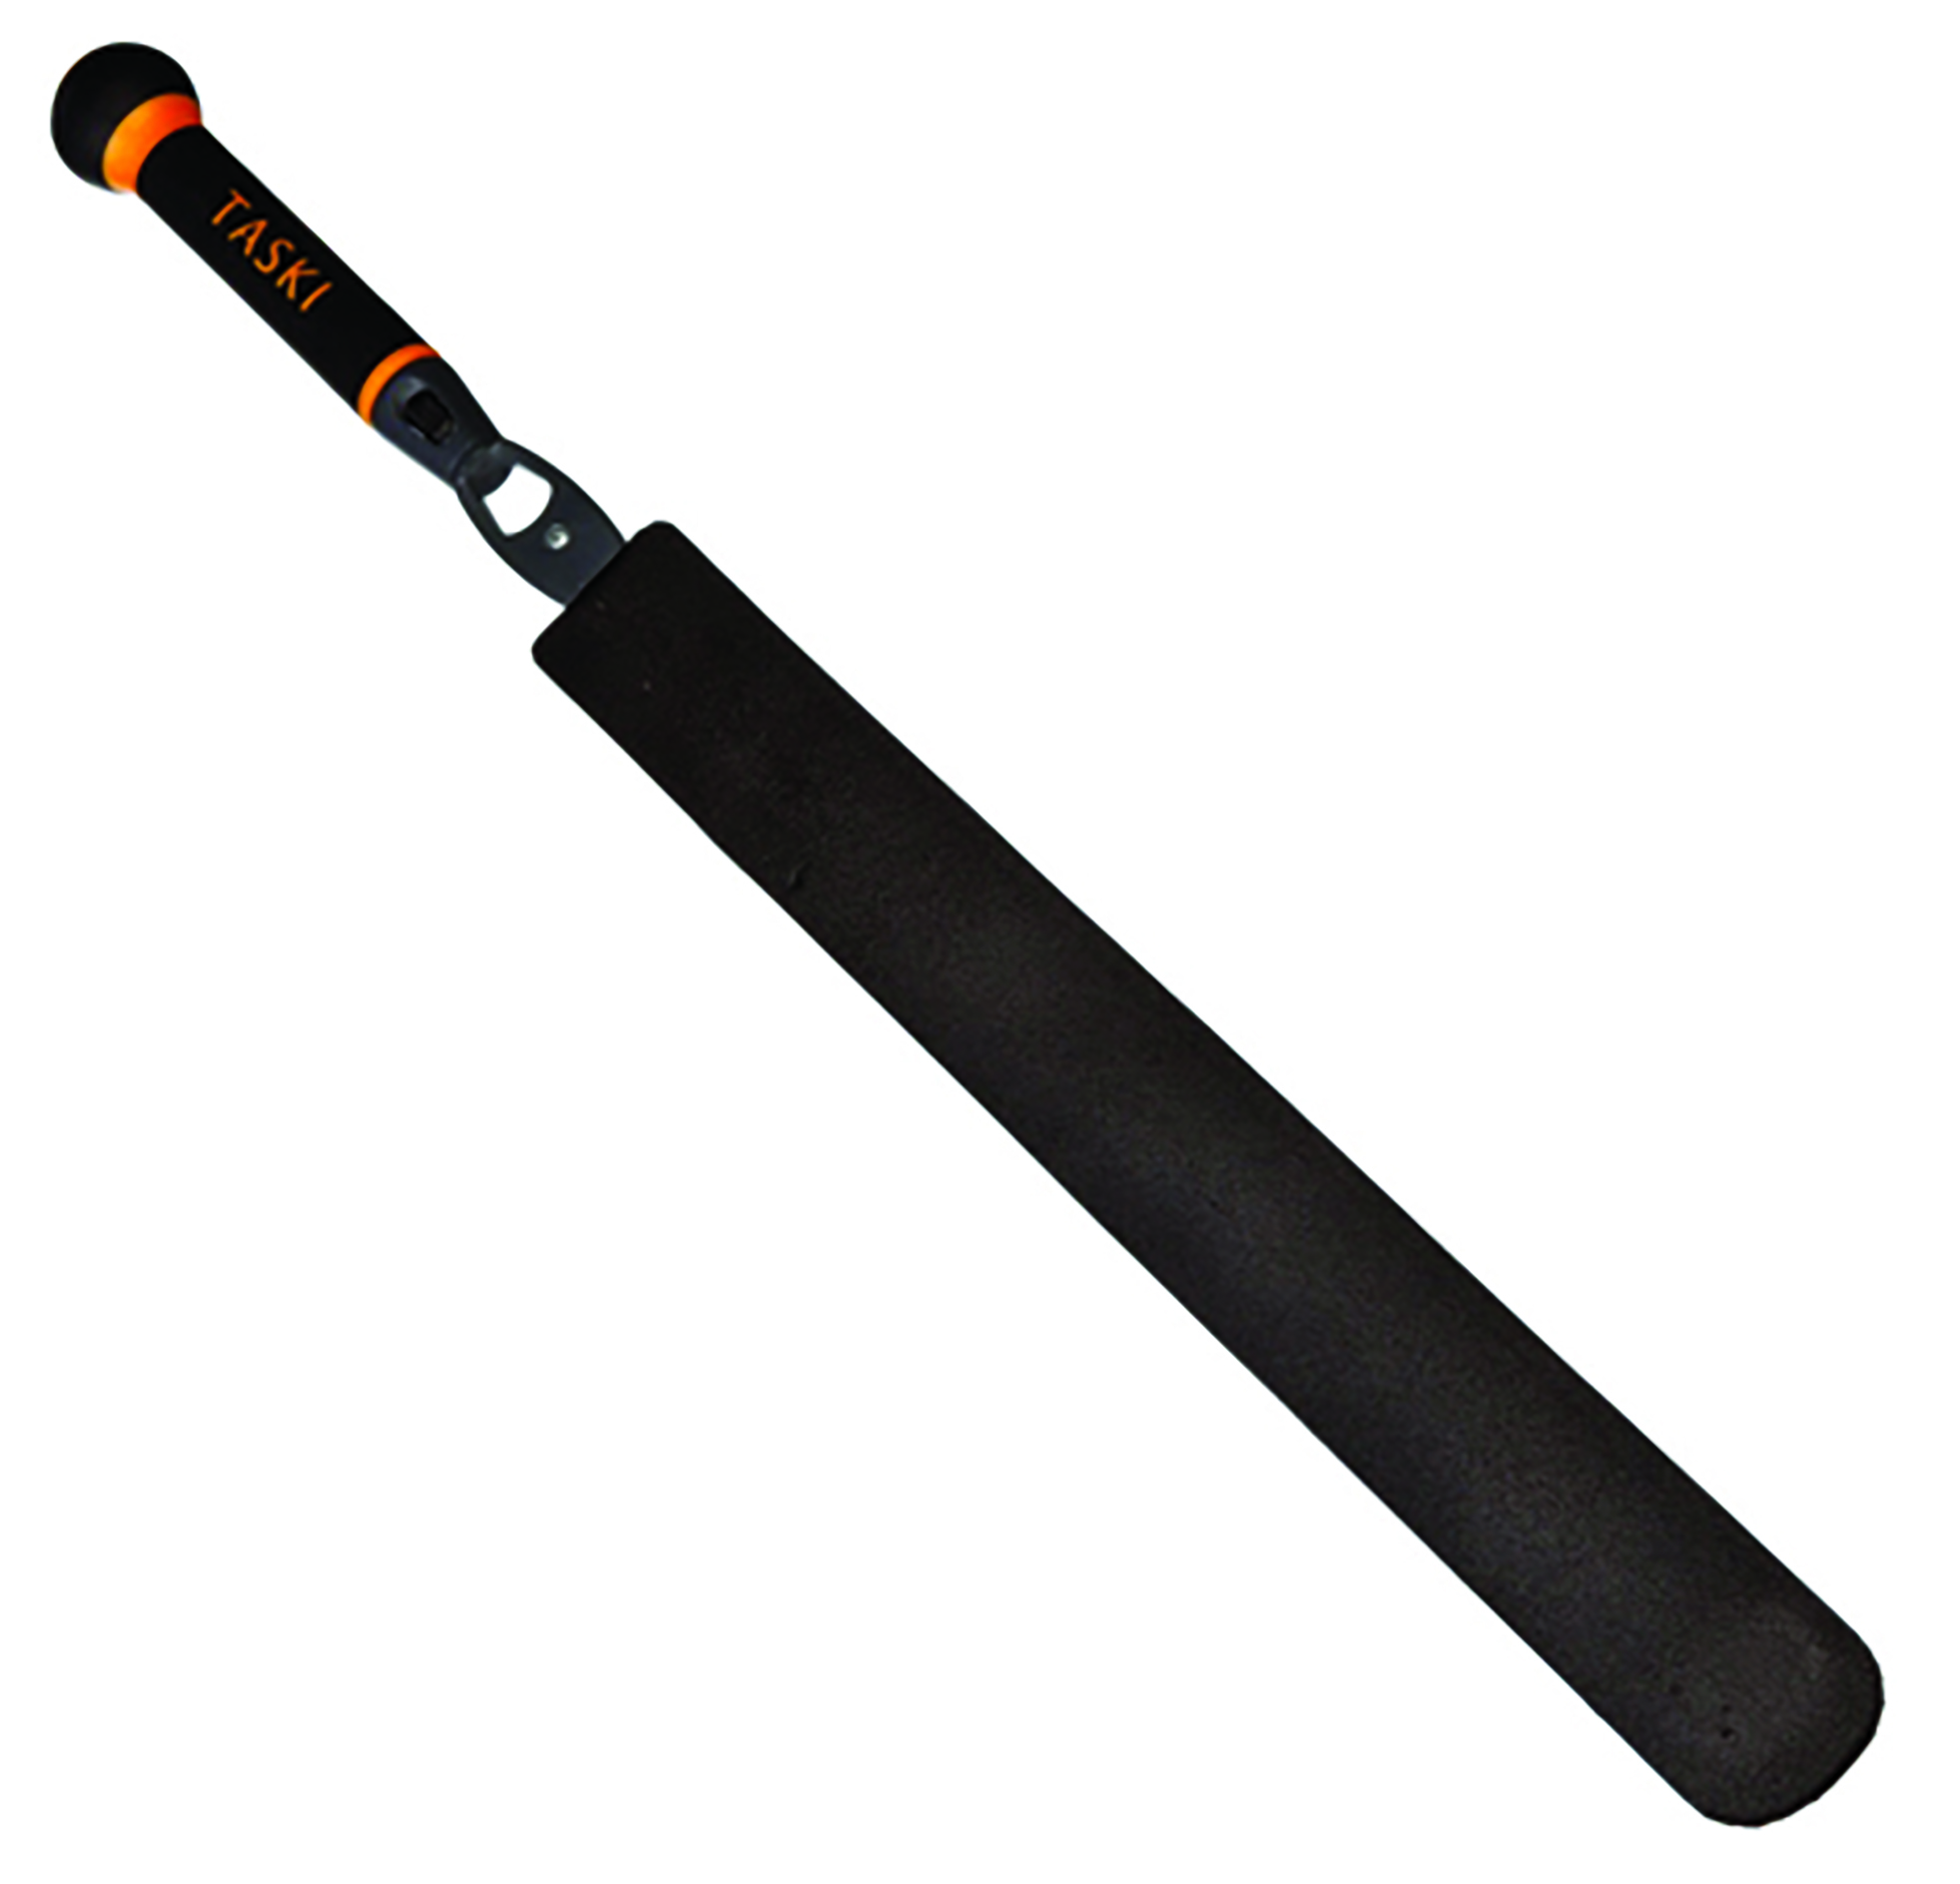 Long black mop handle